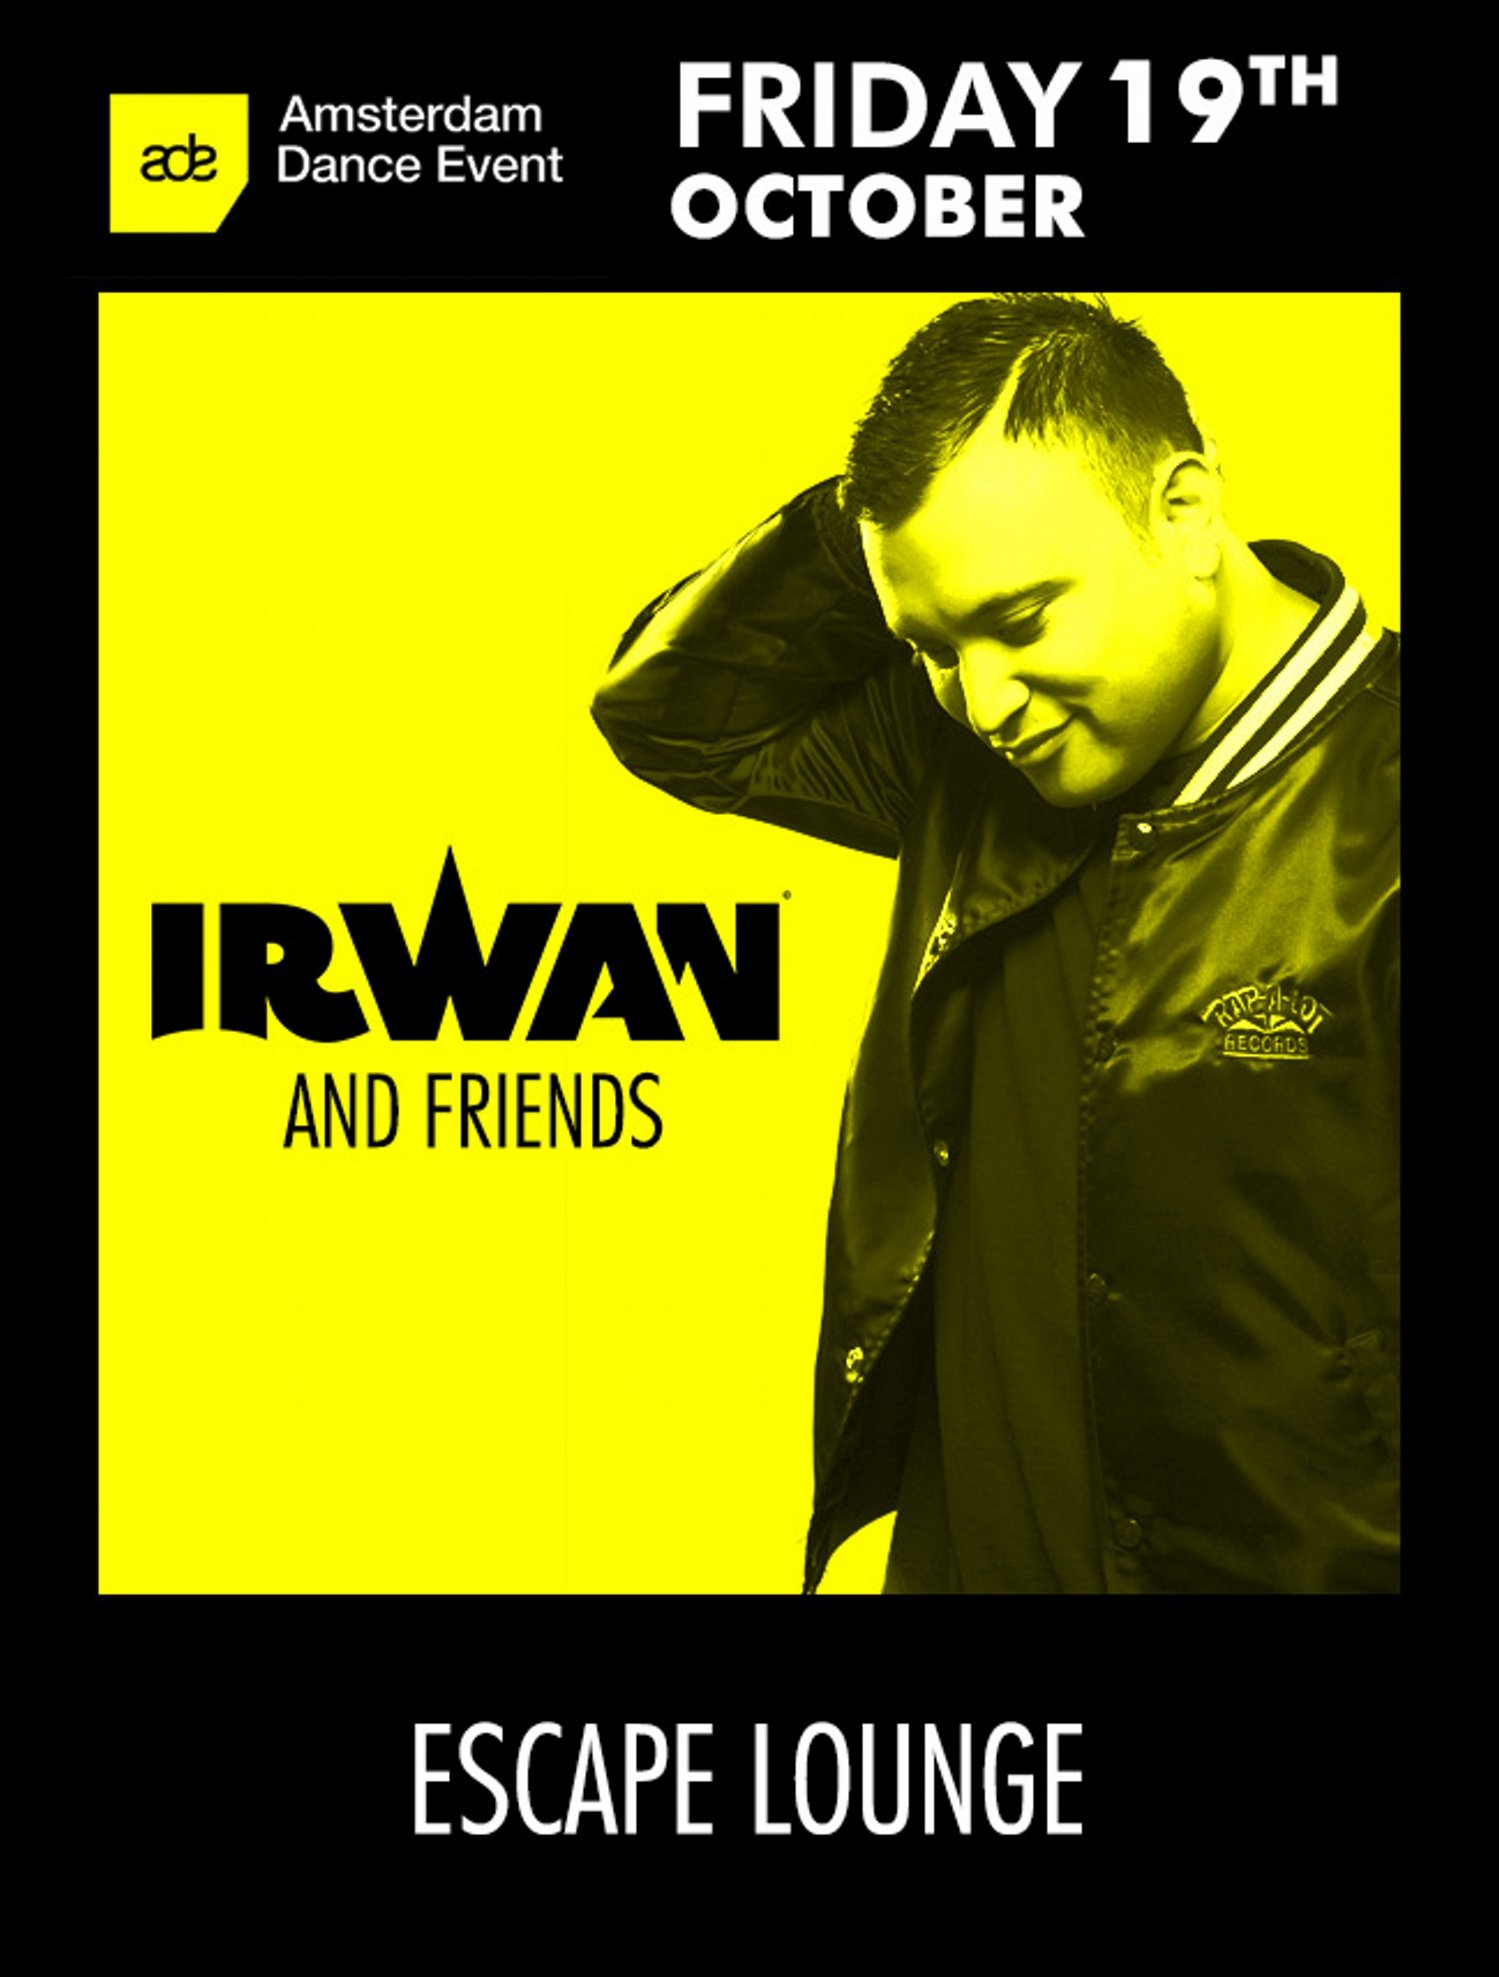 DJ Irwan & Friends